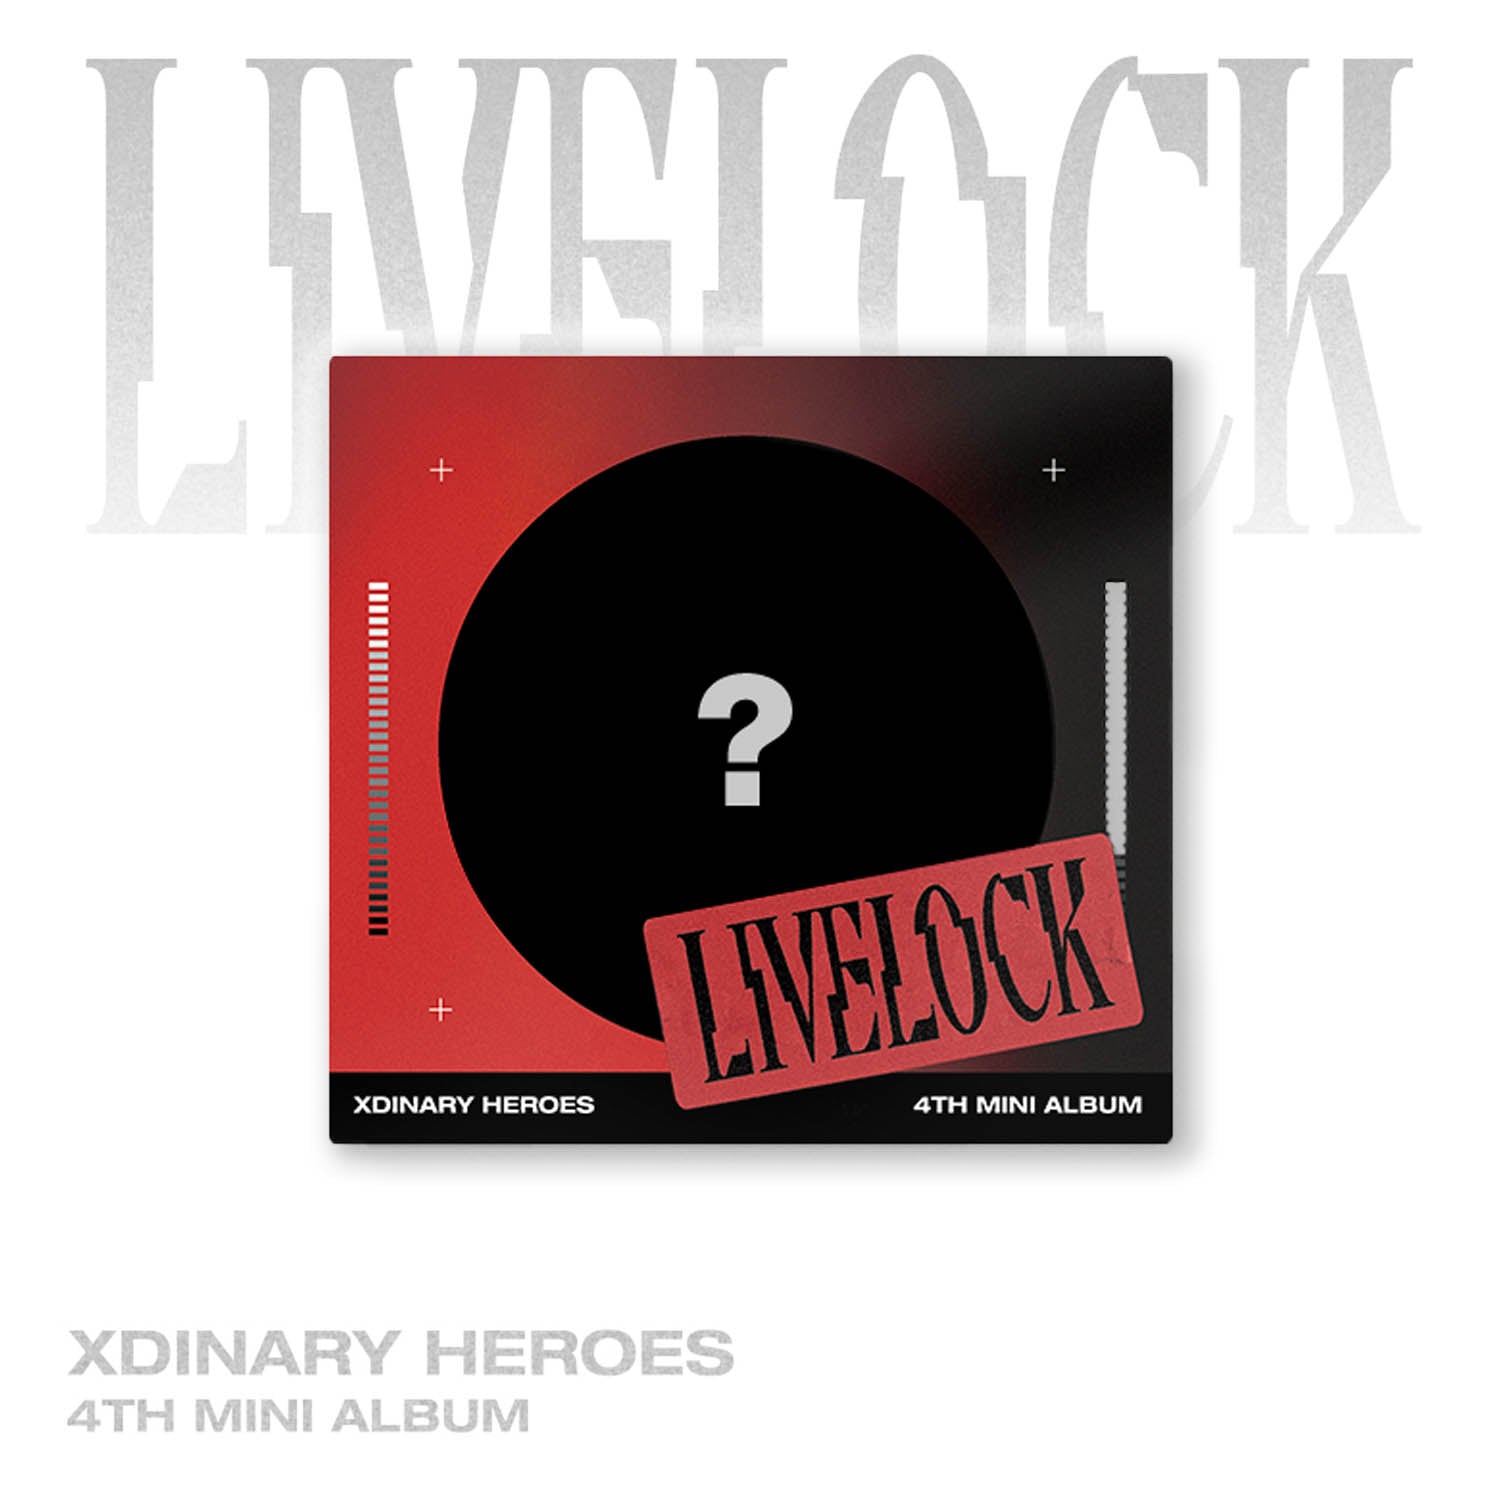 XDINARY HEROES 4TH MINI ALBUM 'LIVELOCK' (DIGIPACK) A VERSION COVER